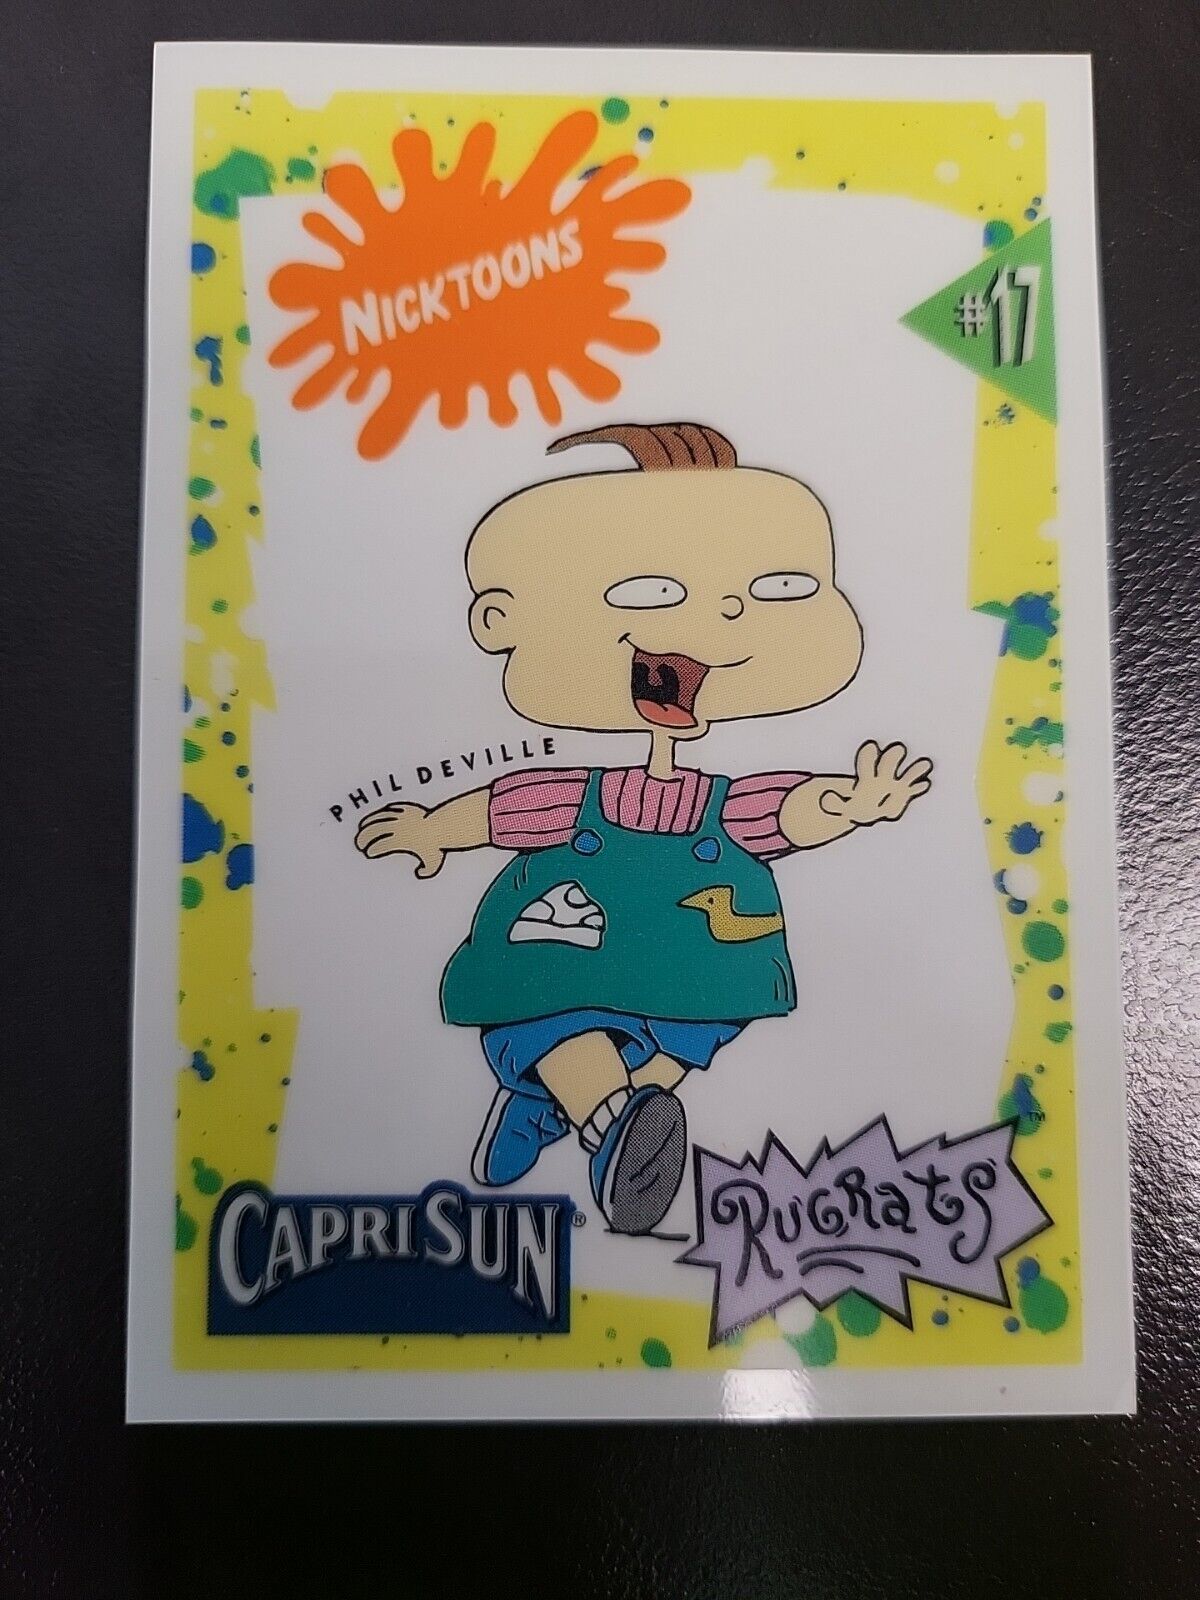 1992 Capri Sun Rugrats Phil Deville Nickelodeon Nicktoons DECAL Sticker card #17